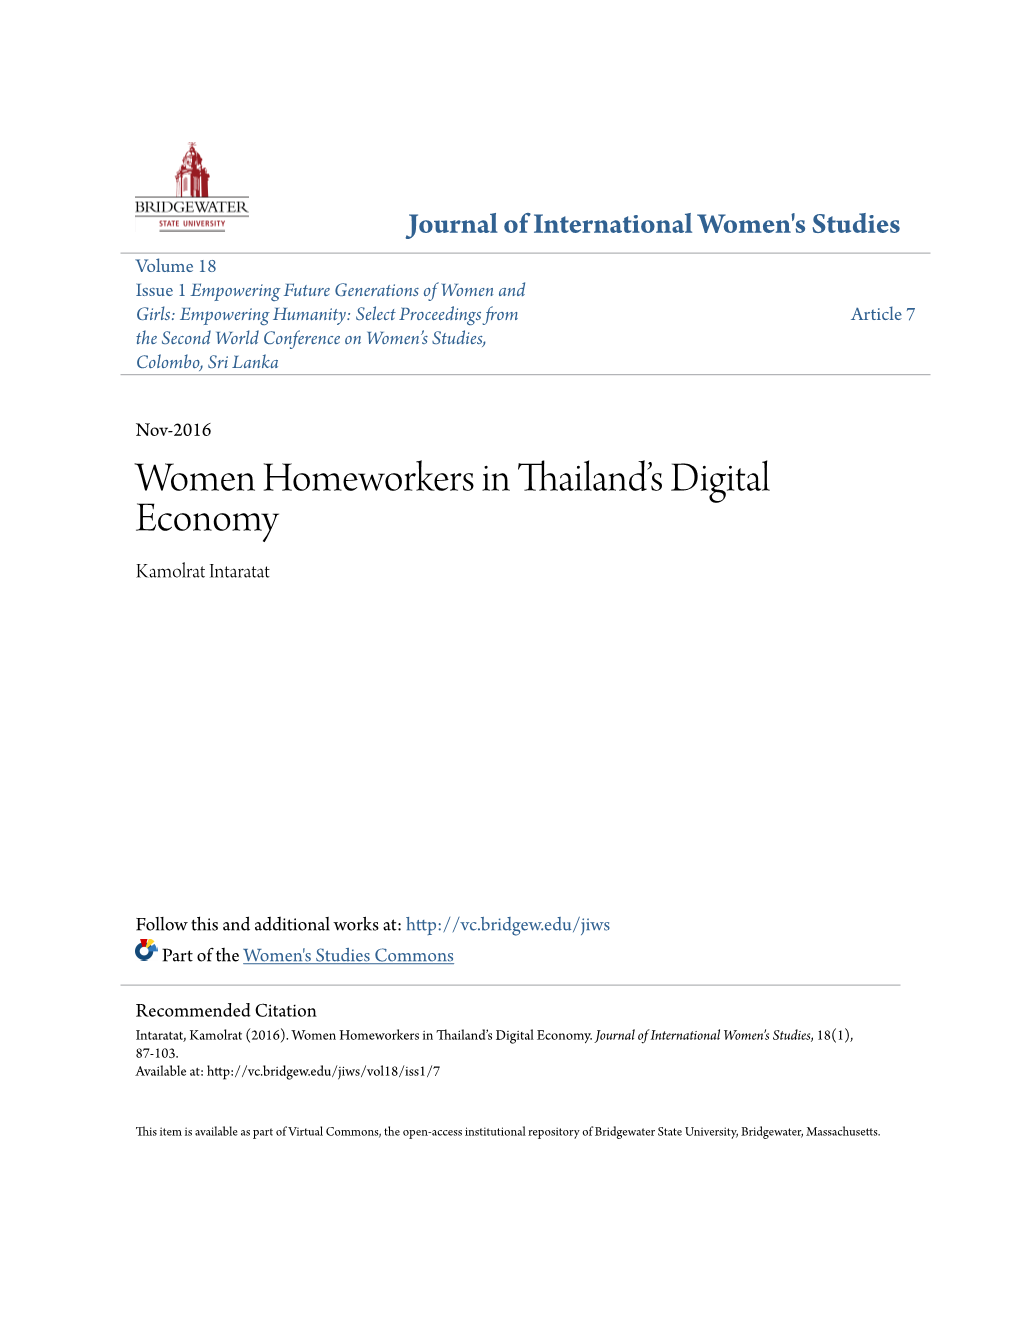 Women Homeworkers in Thailand's Digital Economy